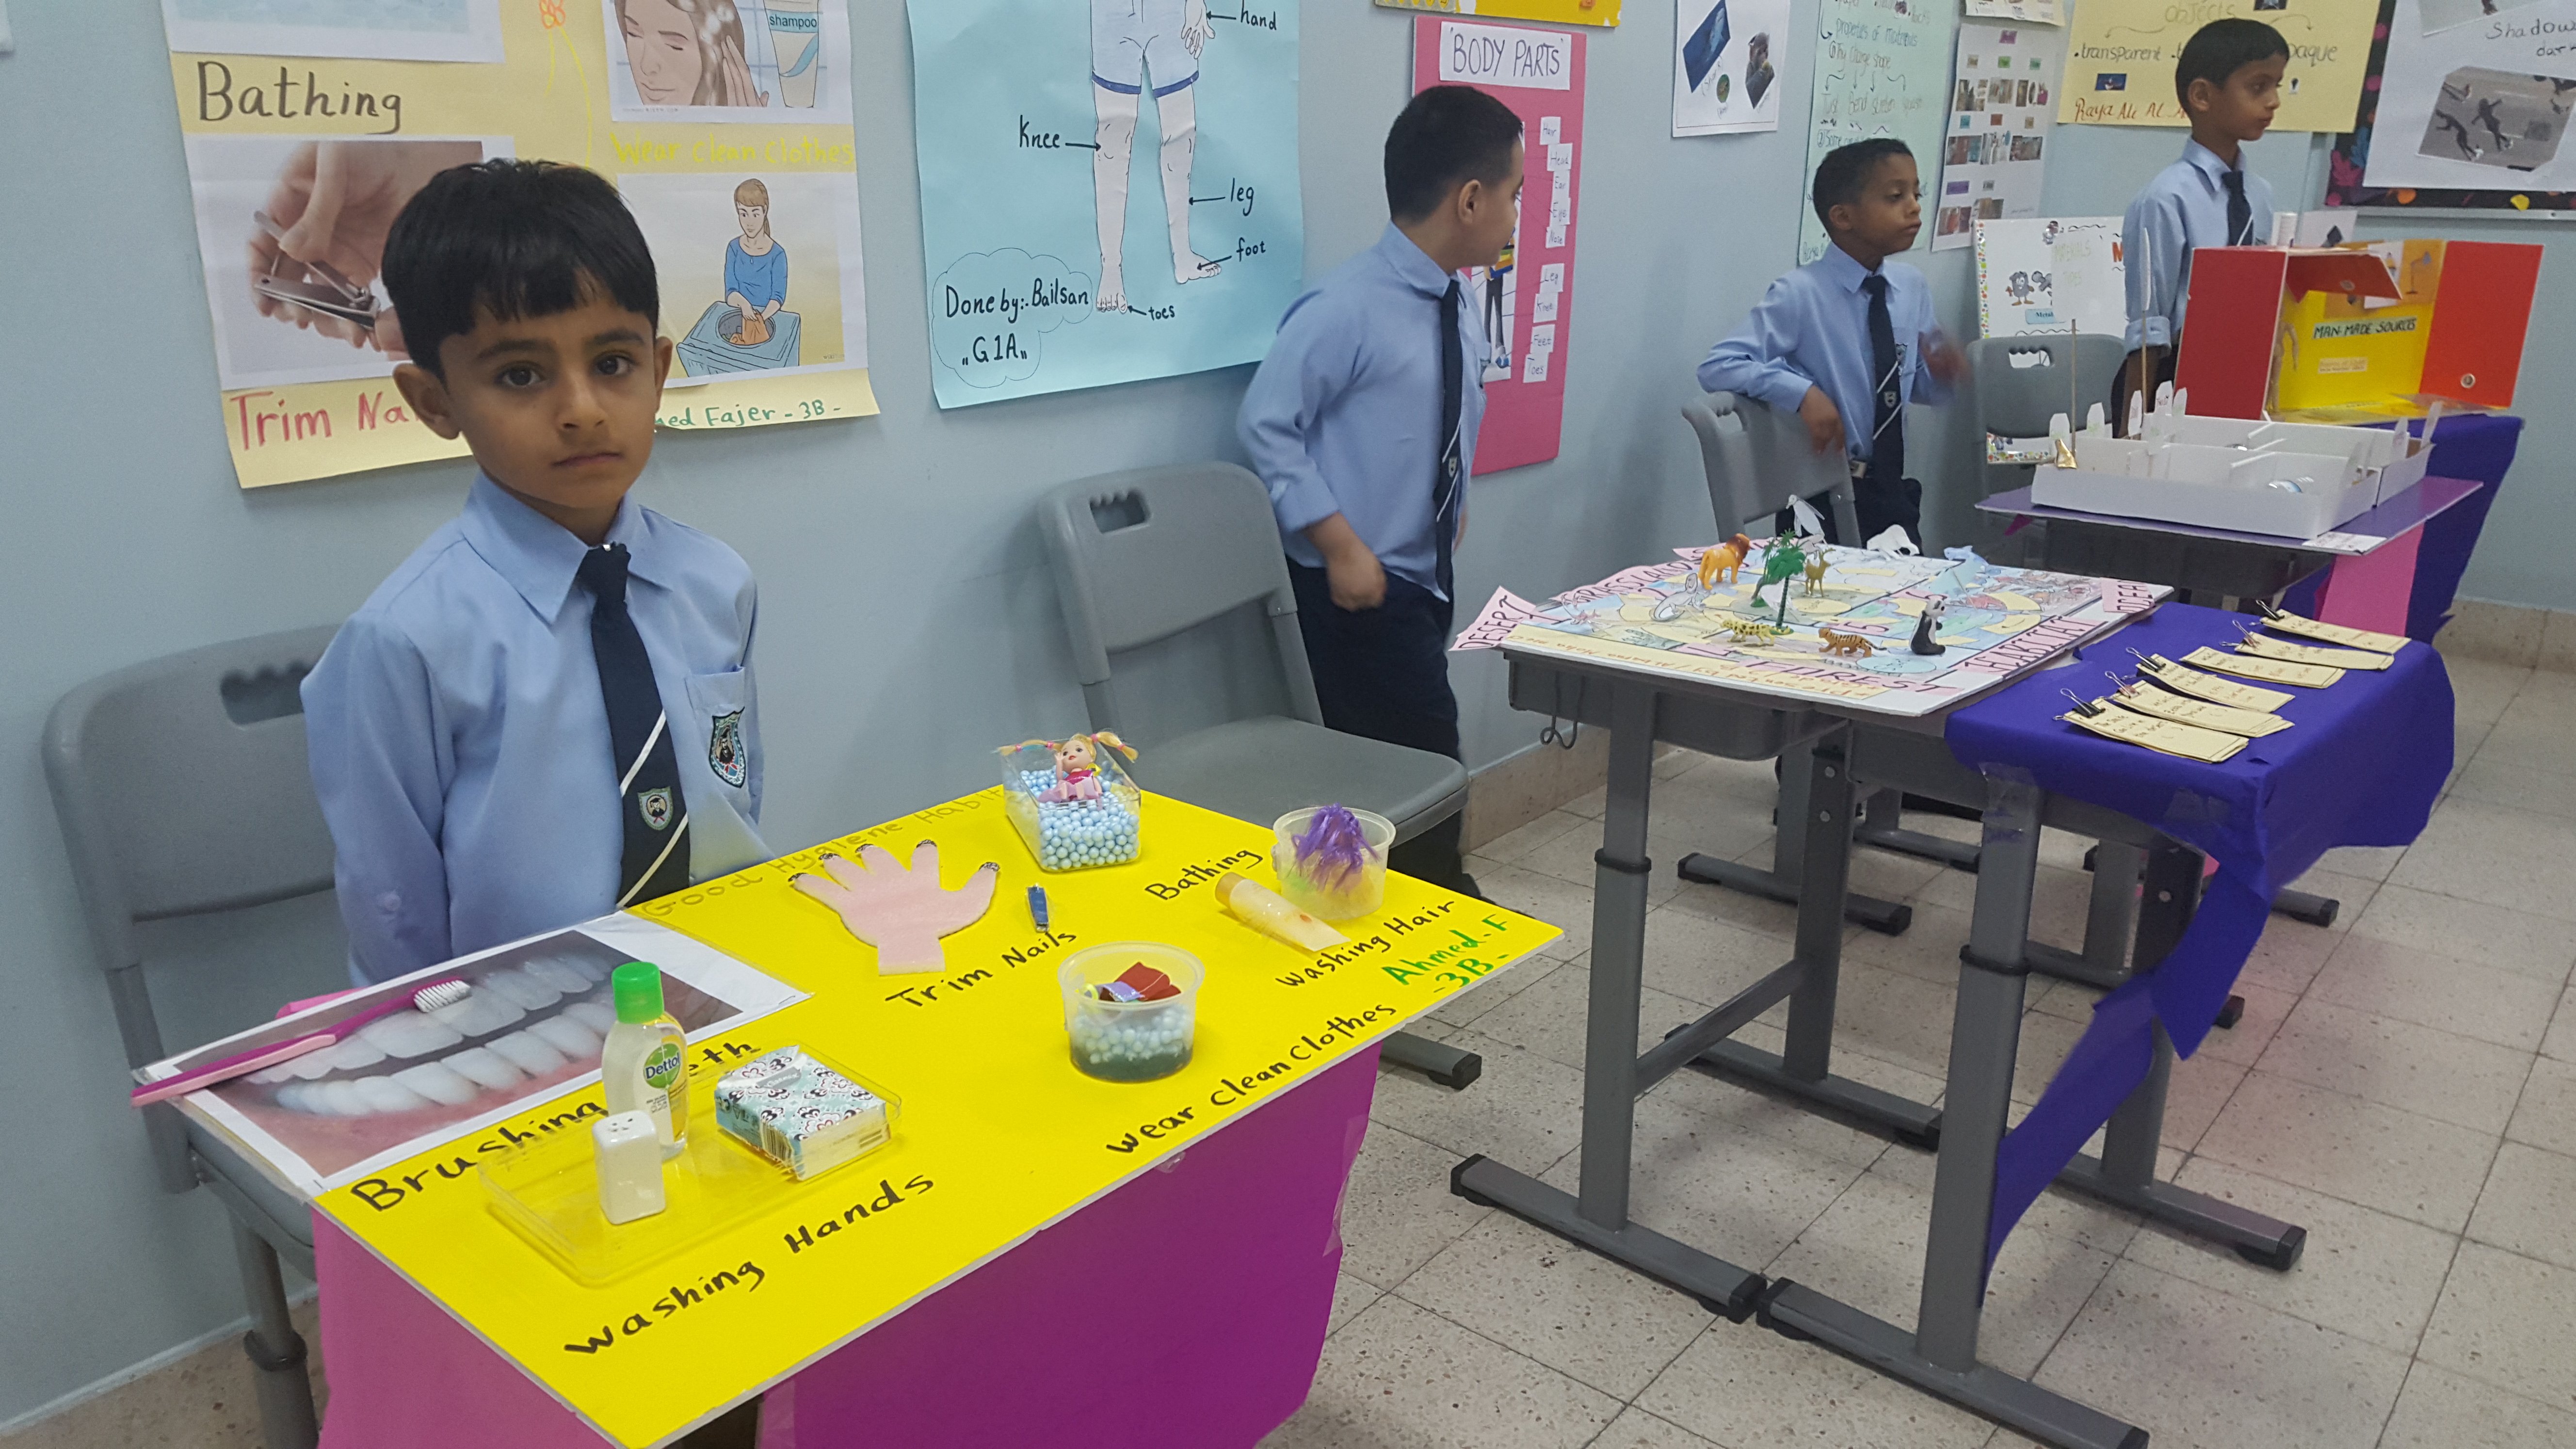 Al Injaz School's annual exhibition showcases students' work